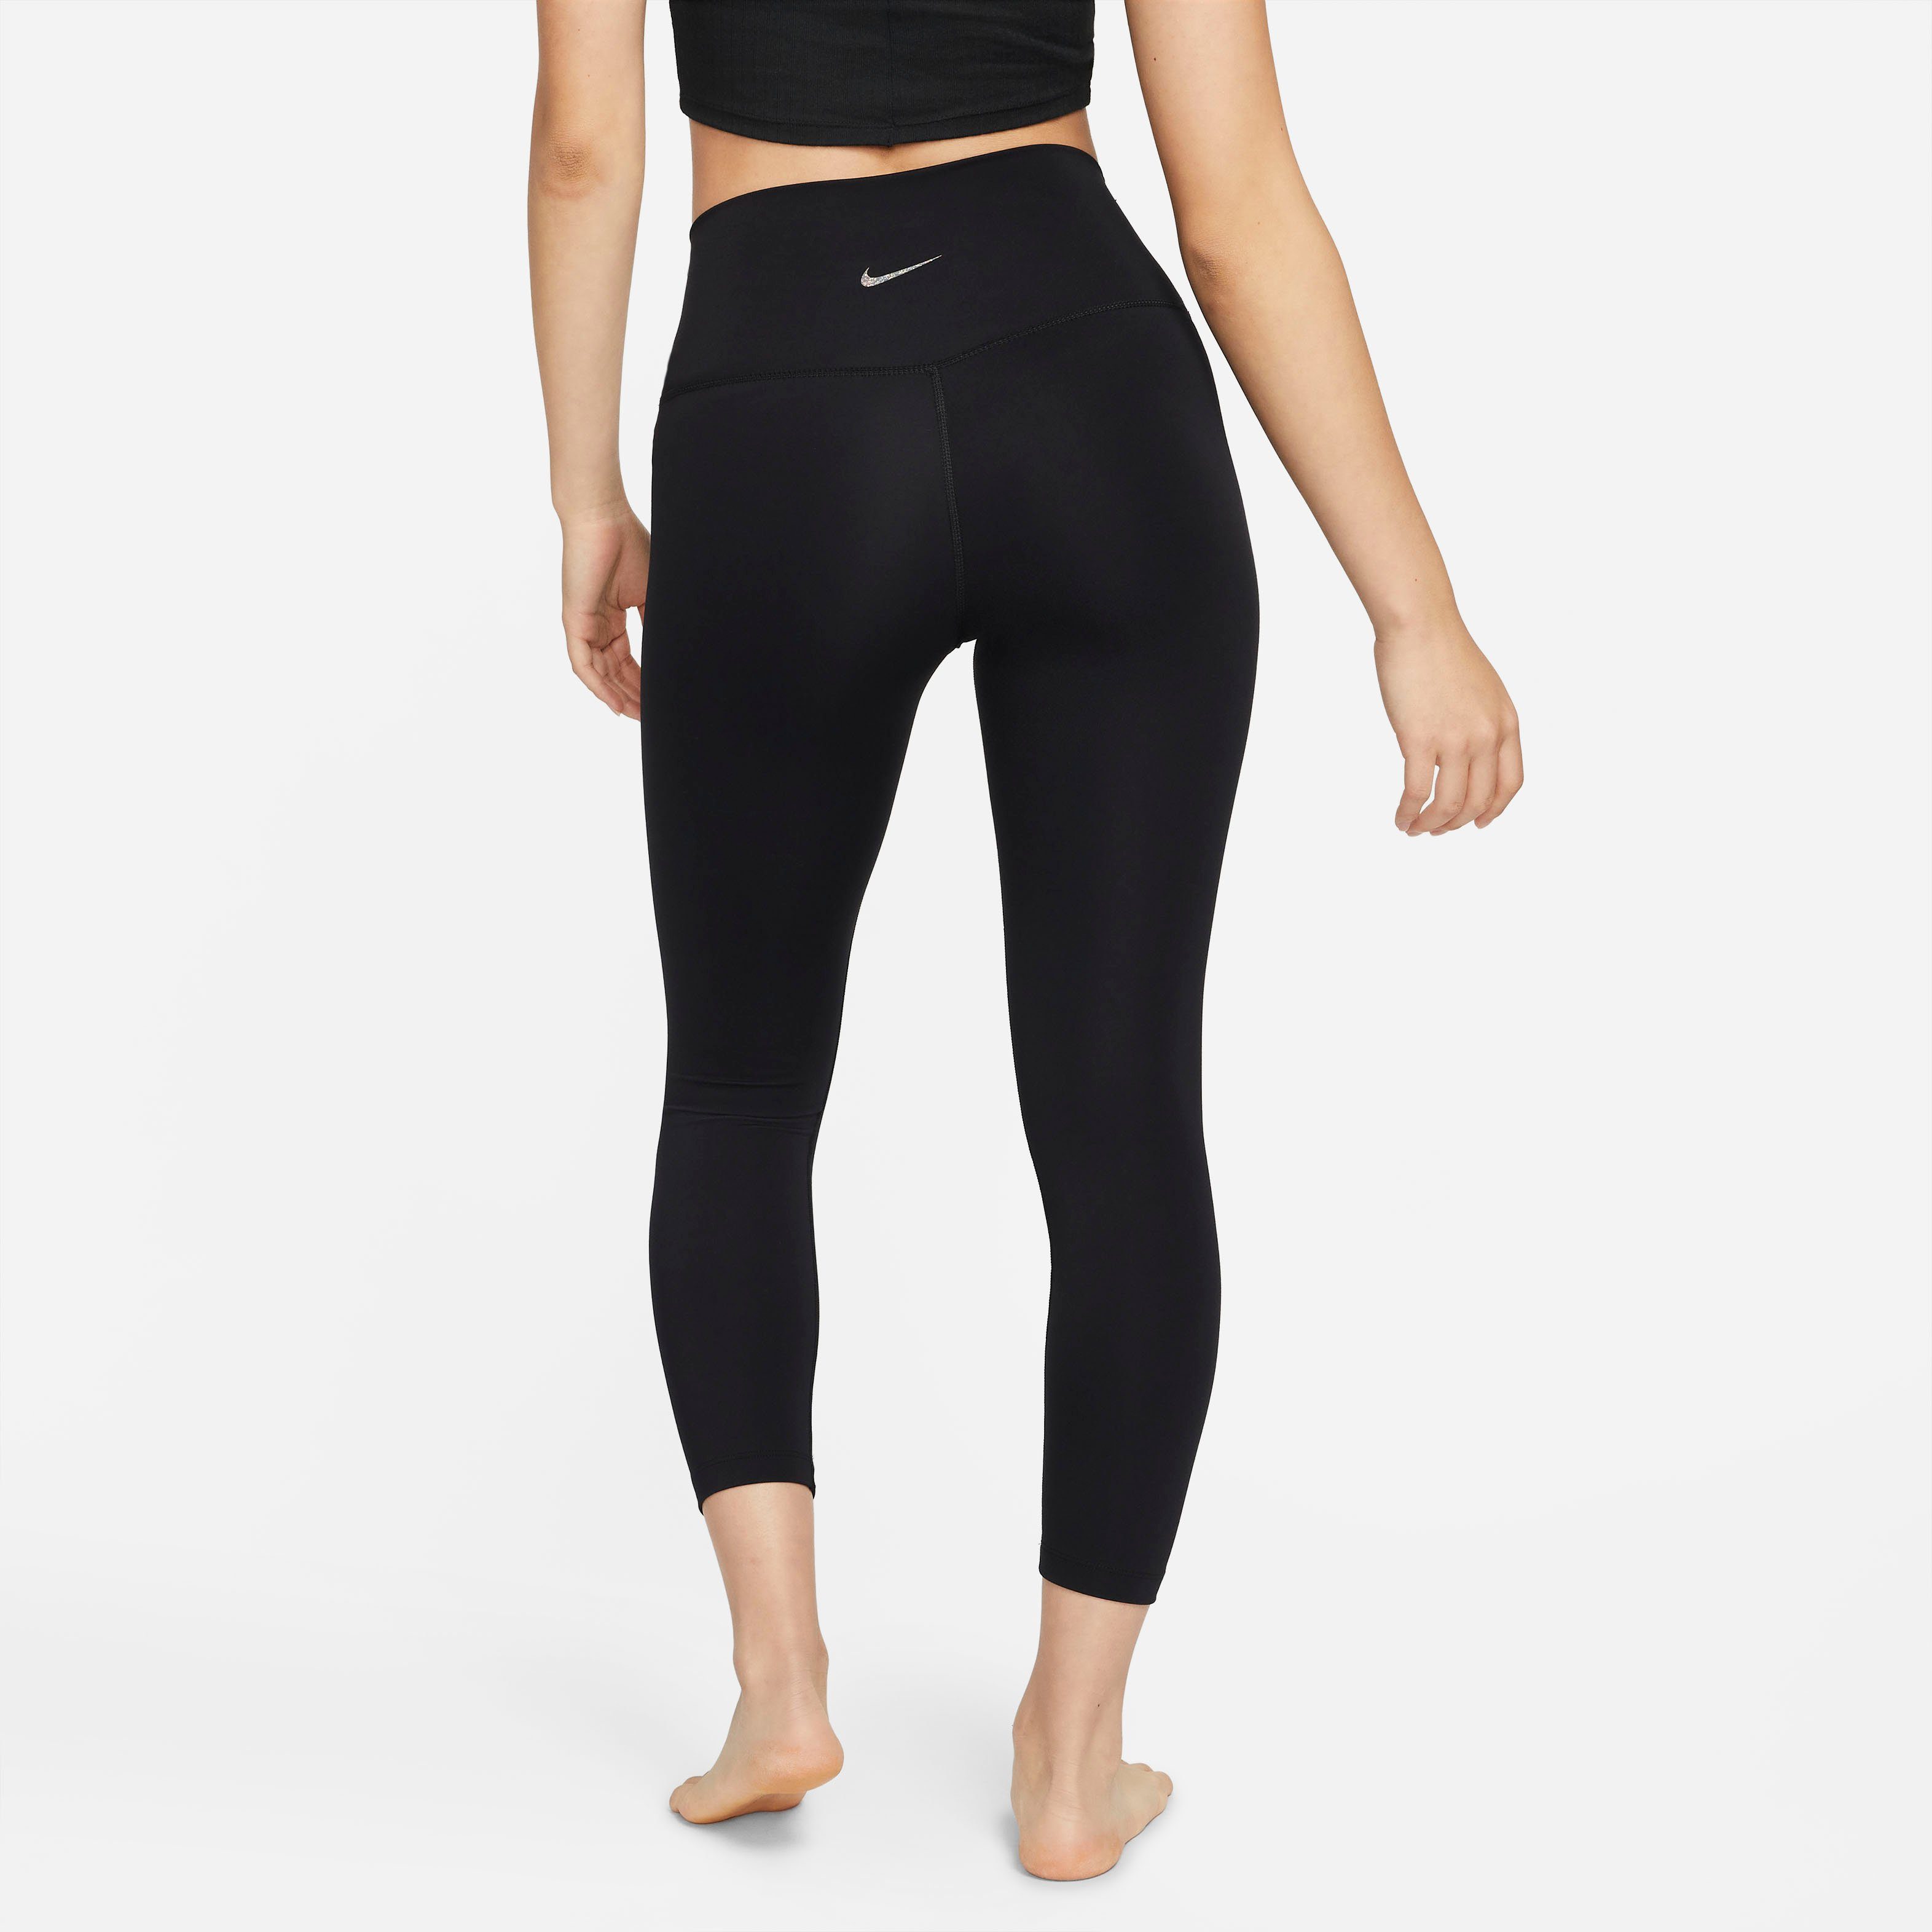 Nike / GREY Trainingstights BLACK/IRON Yoga Women's Leggings Dri-FIT High-Waisted